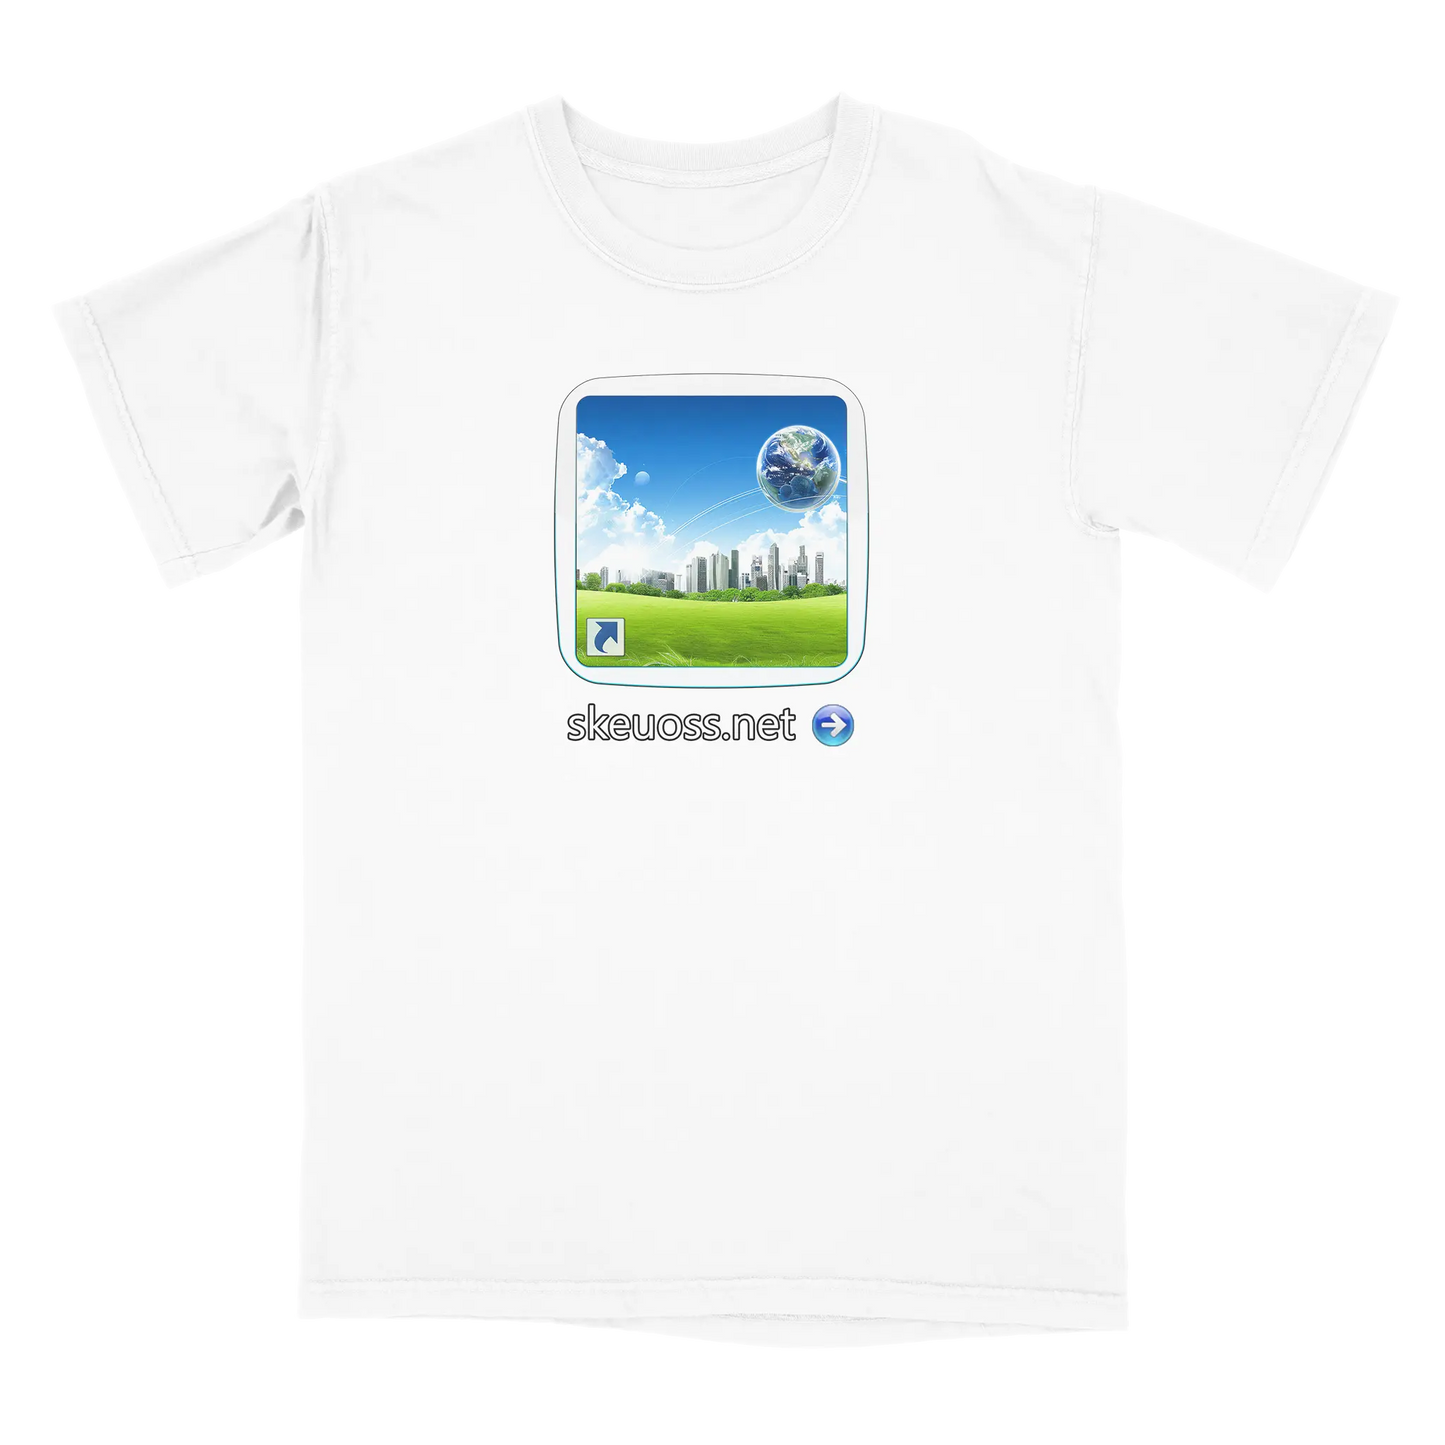 Frutiger Aero T-shirt - User Login Collection - User 379